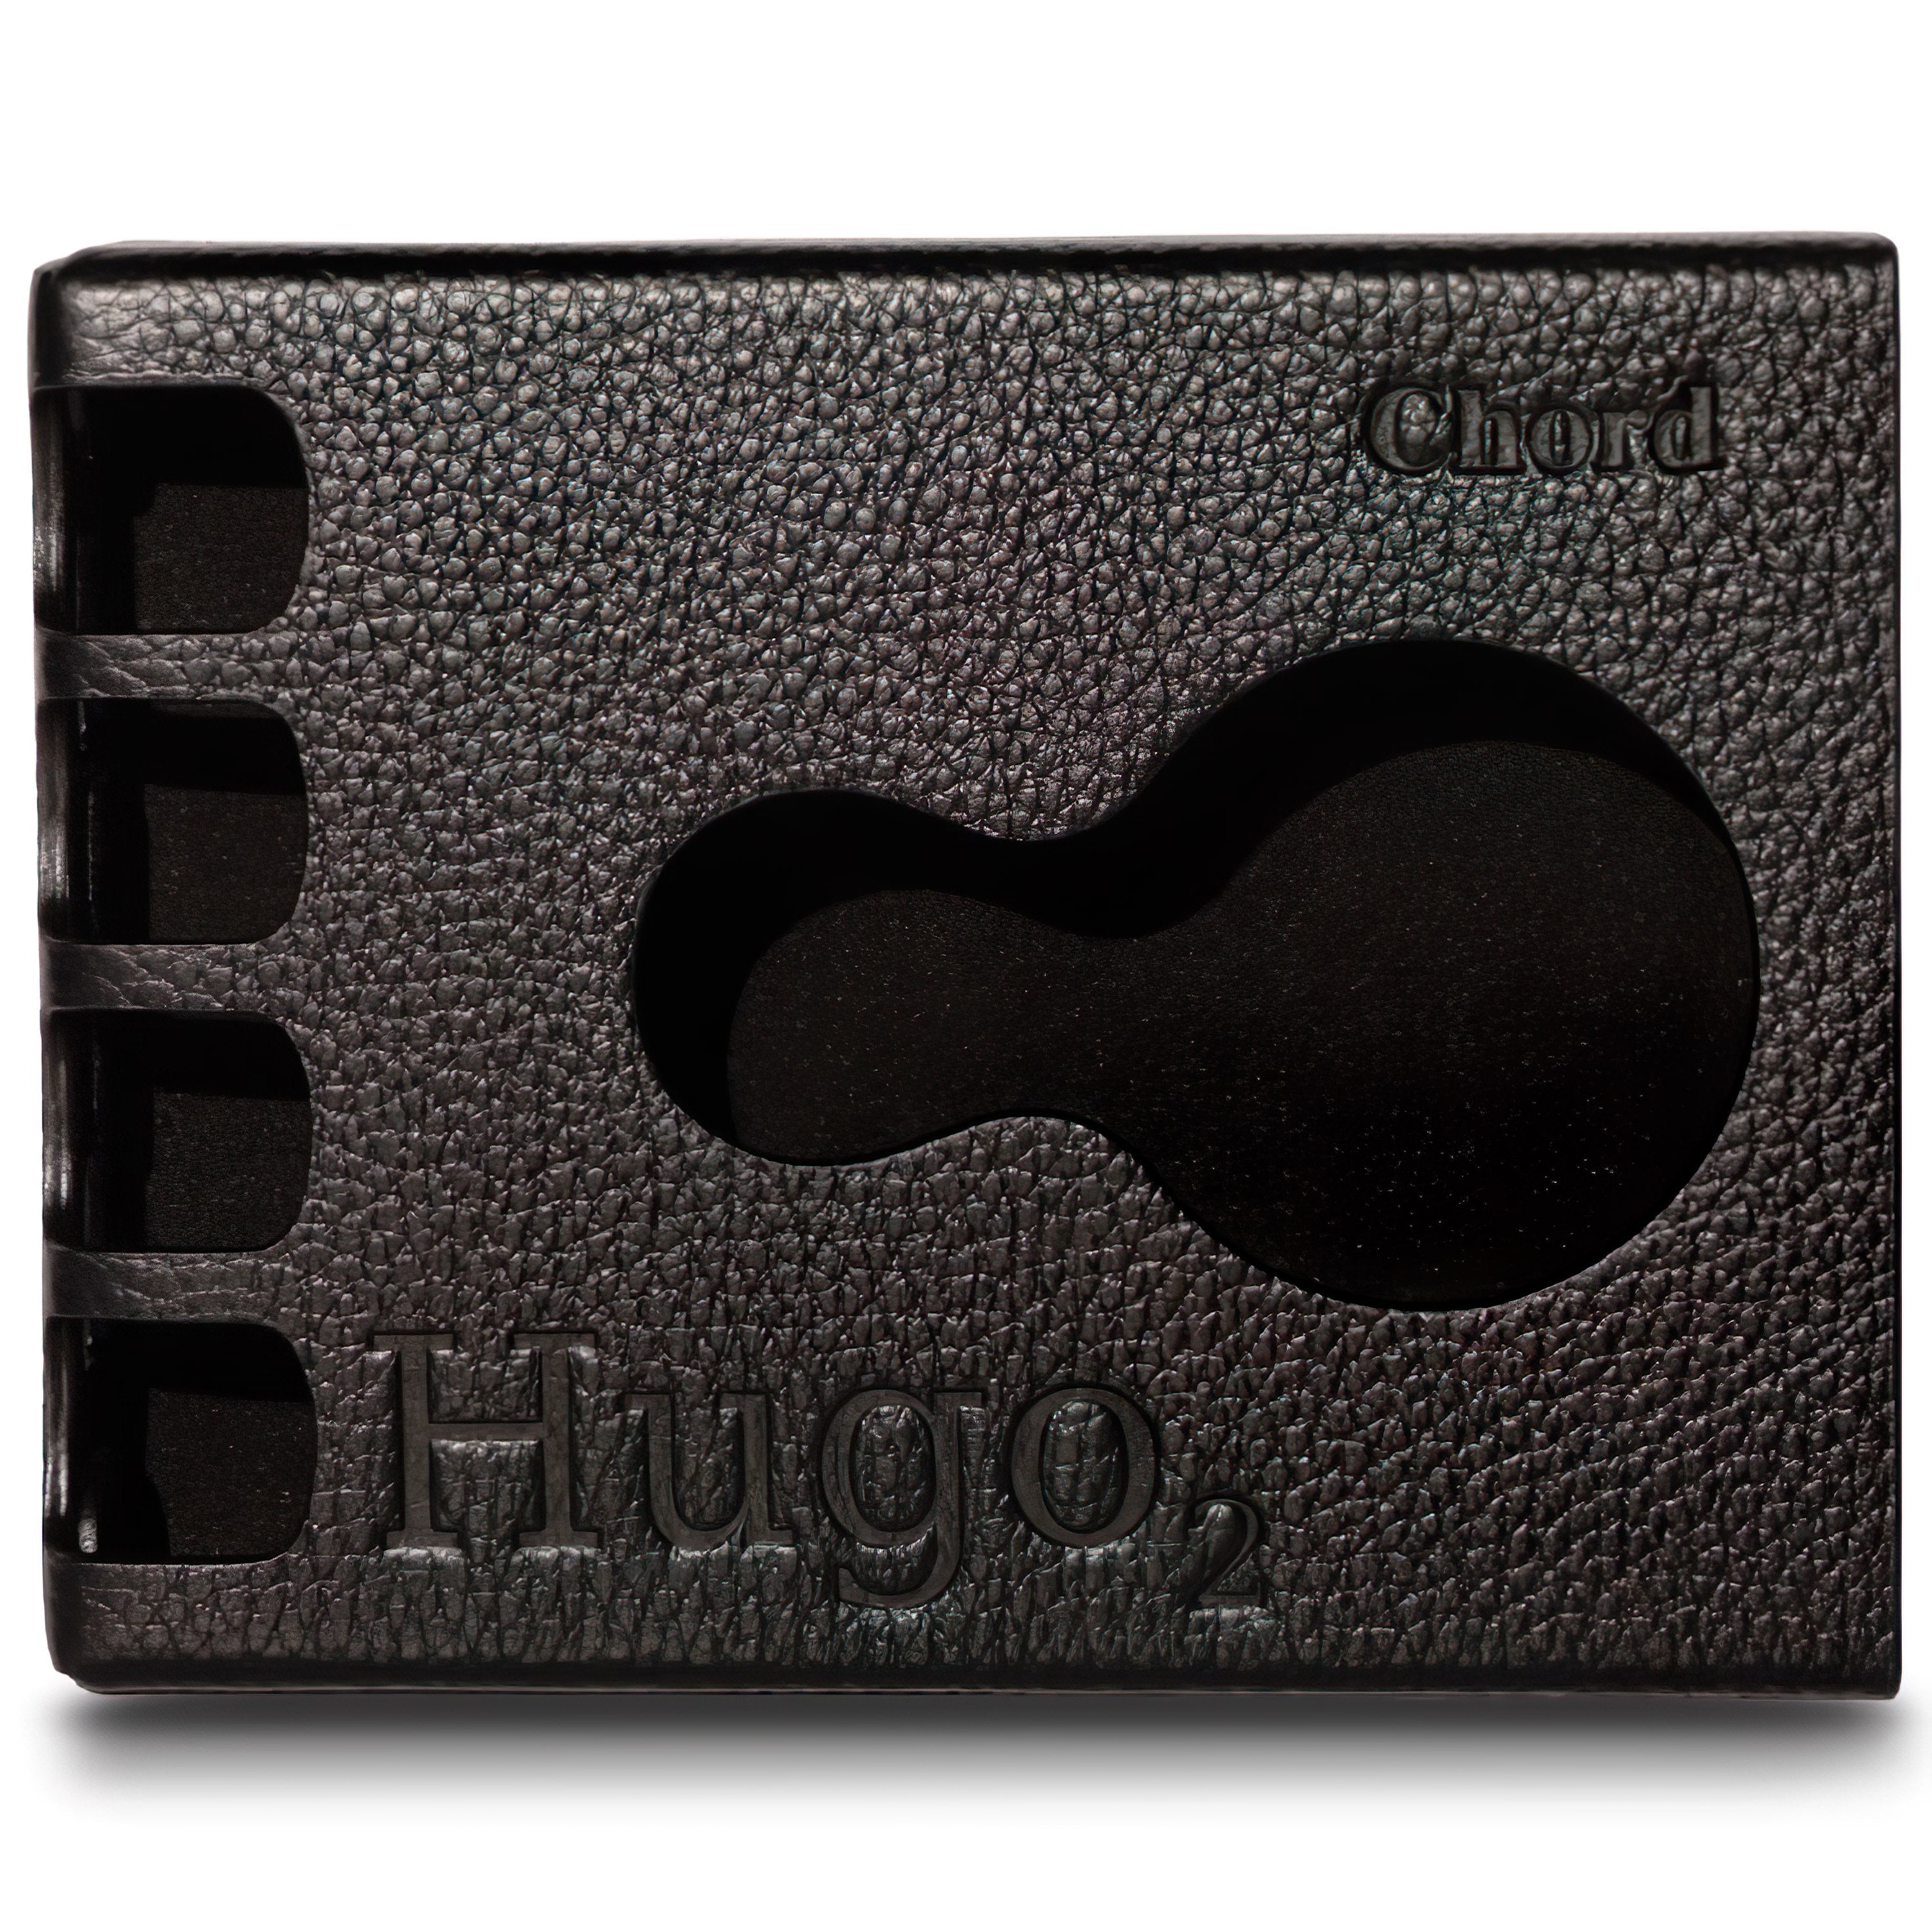 Chord Hugo 2 Slim Leather Case